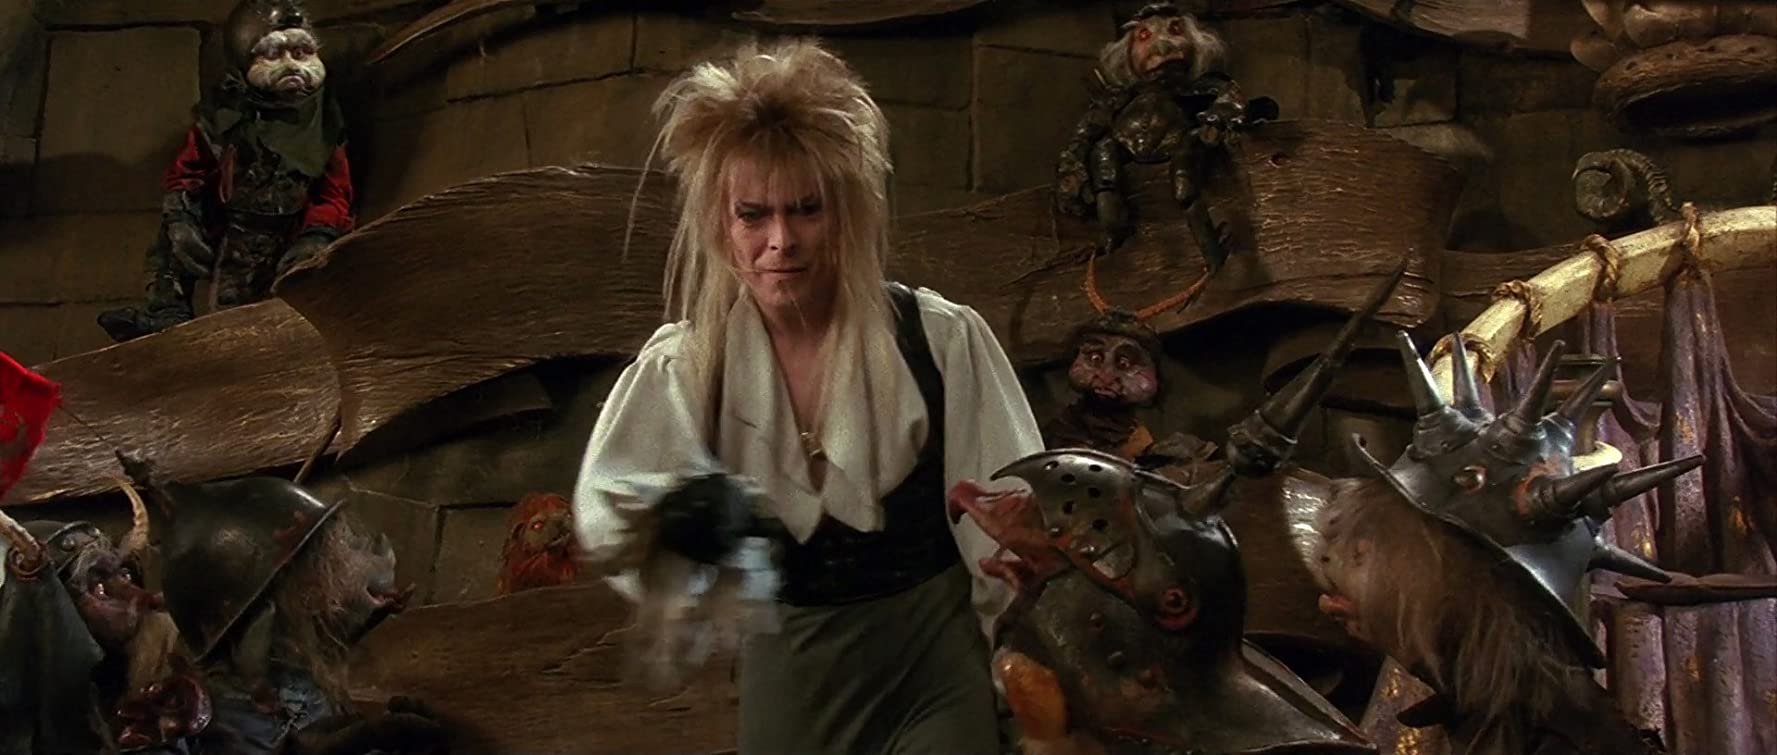 David Bowie in Labyrinth (1986)